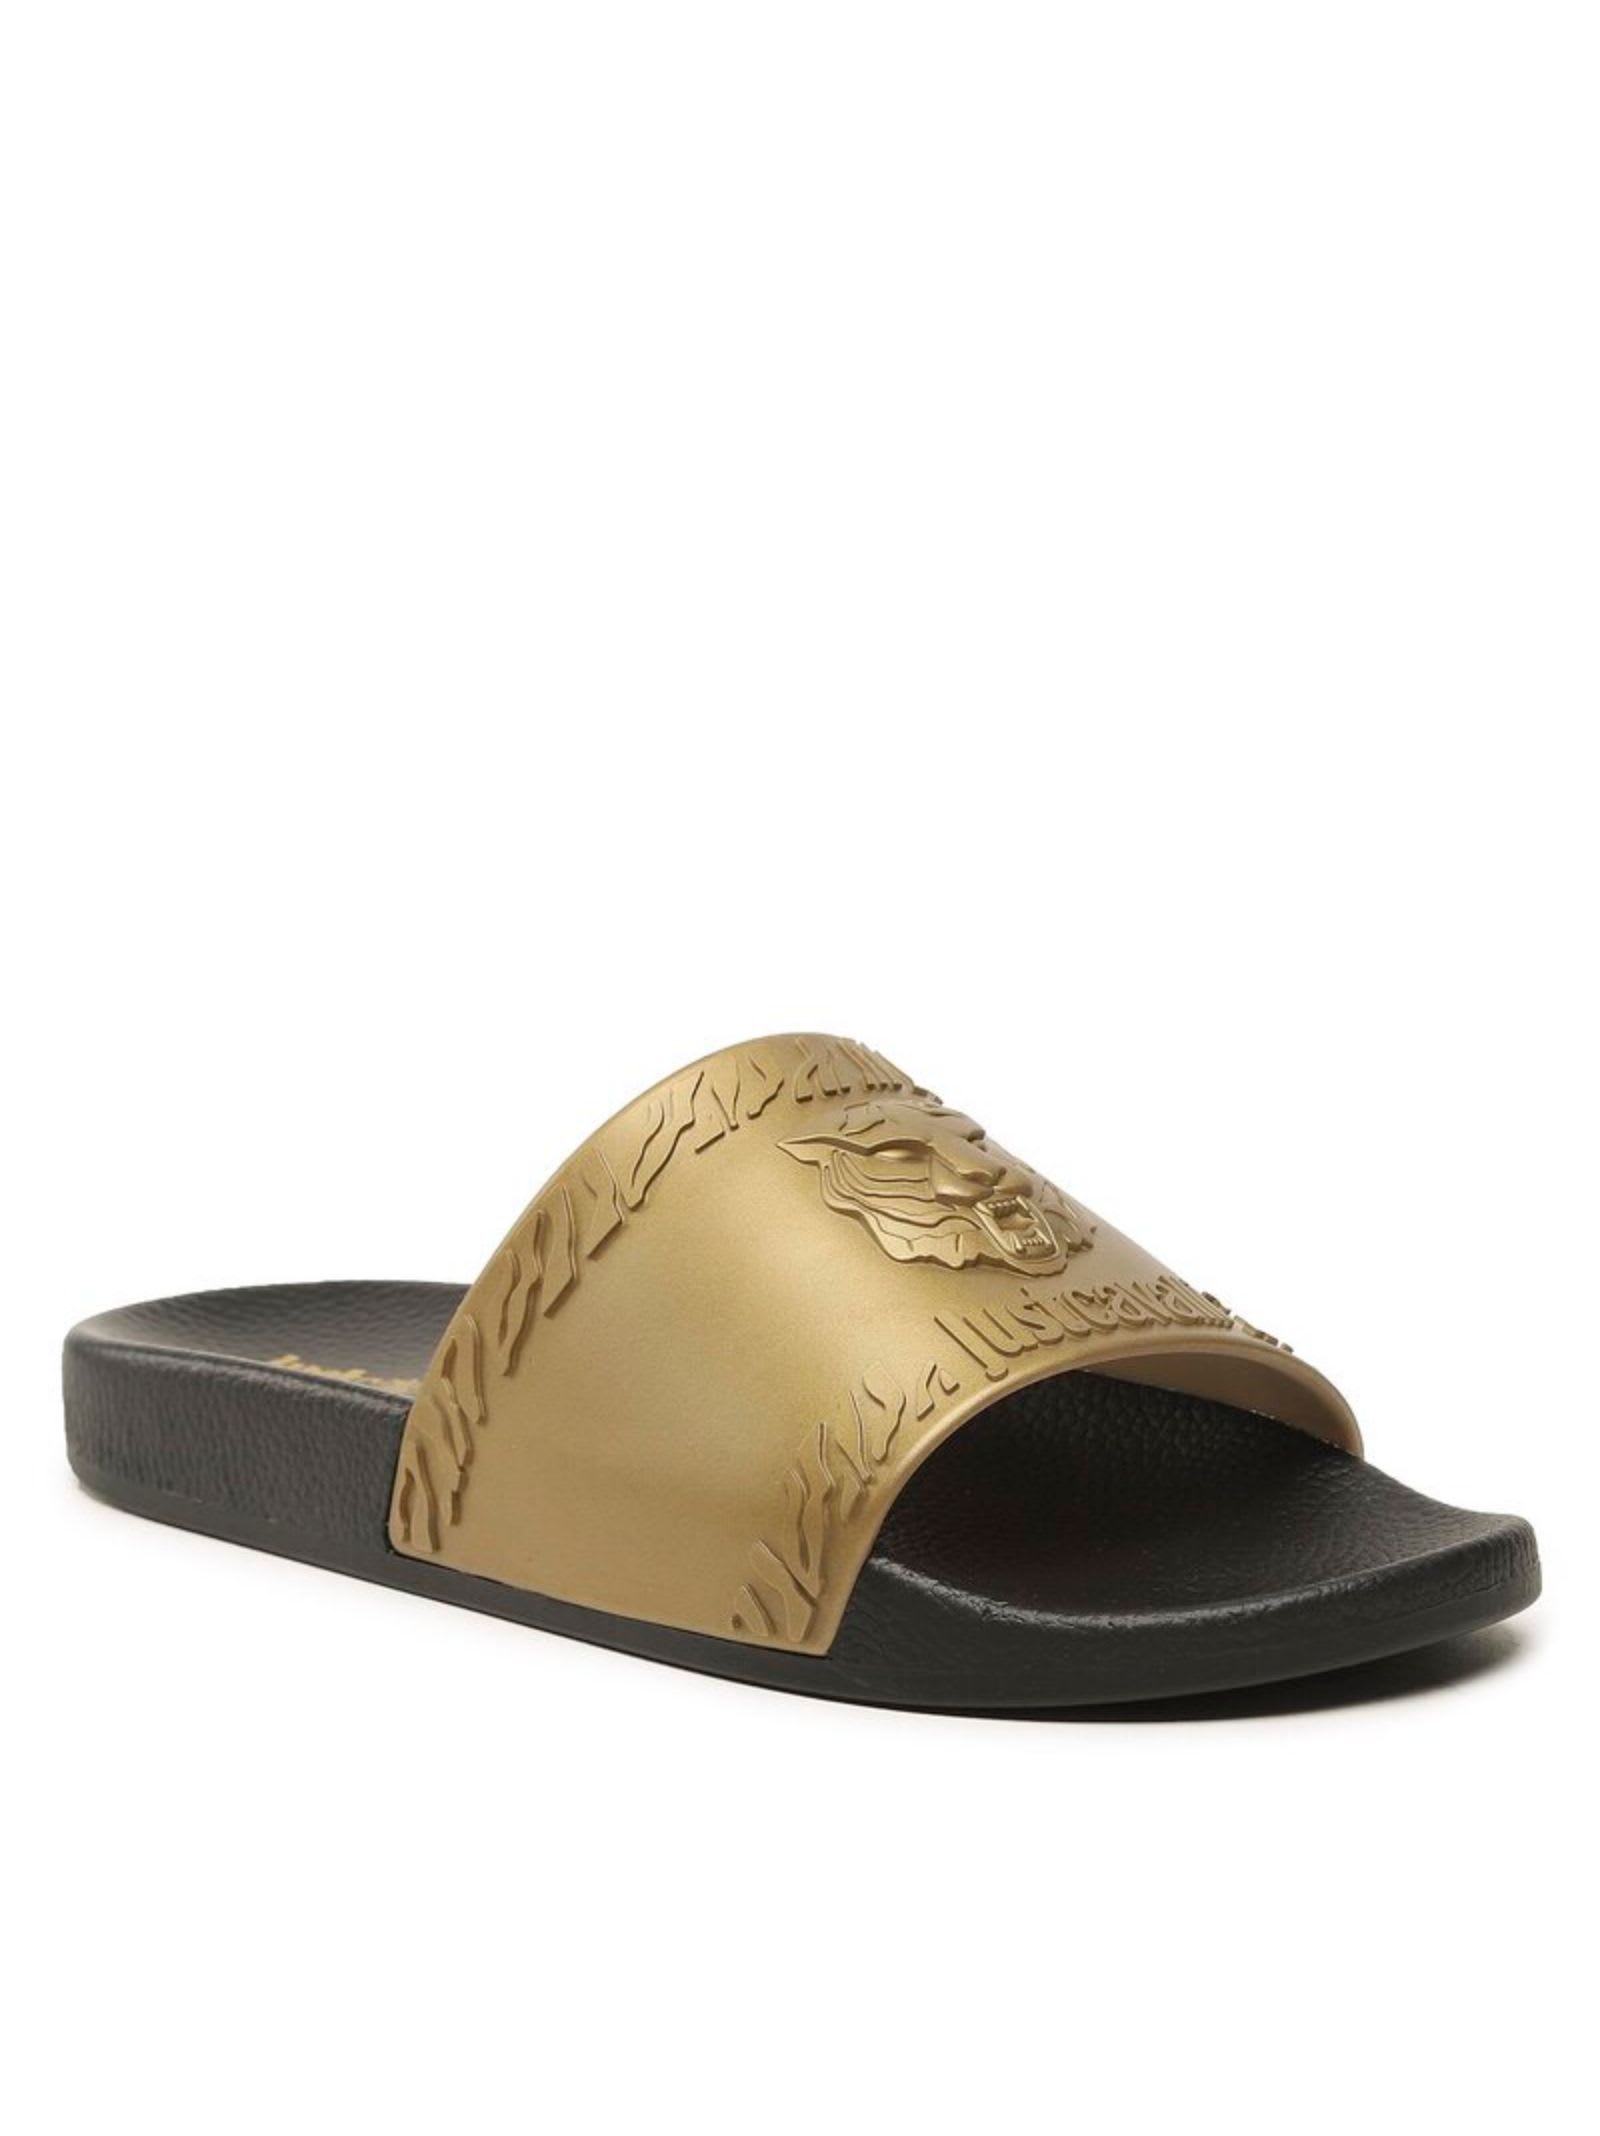 Roberto Cavalli Just Cavalli Shoes In Gold/black